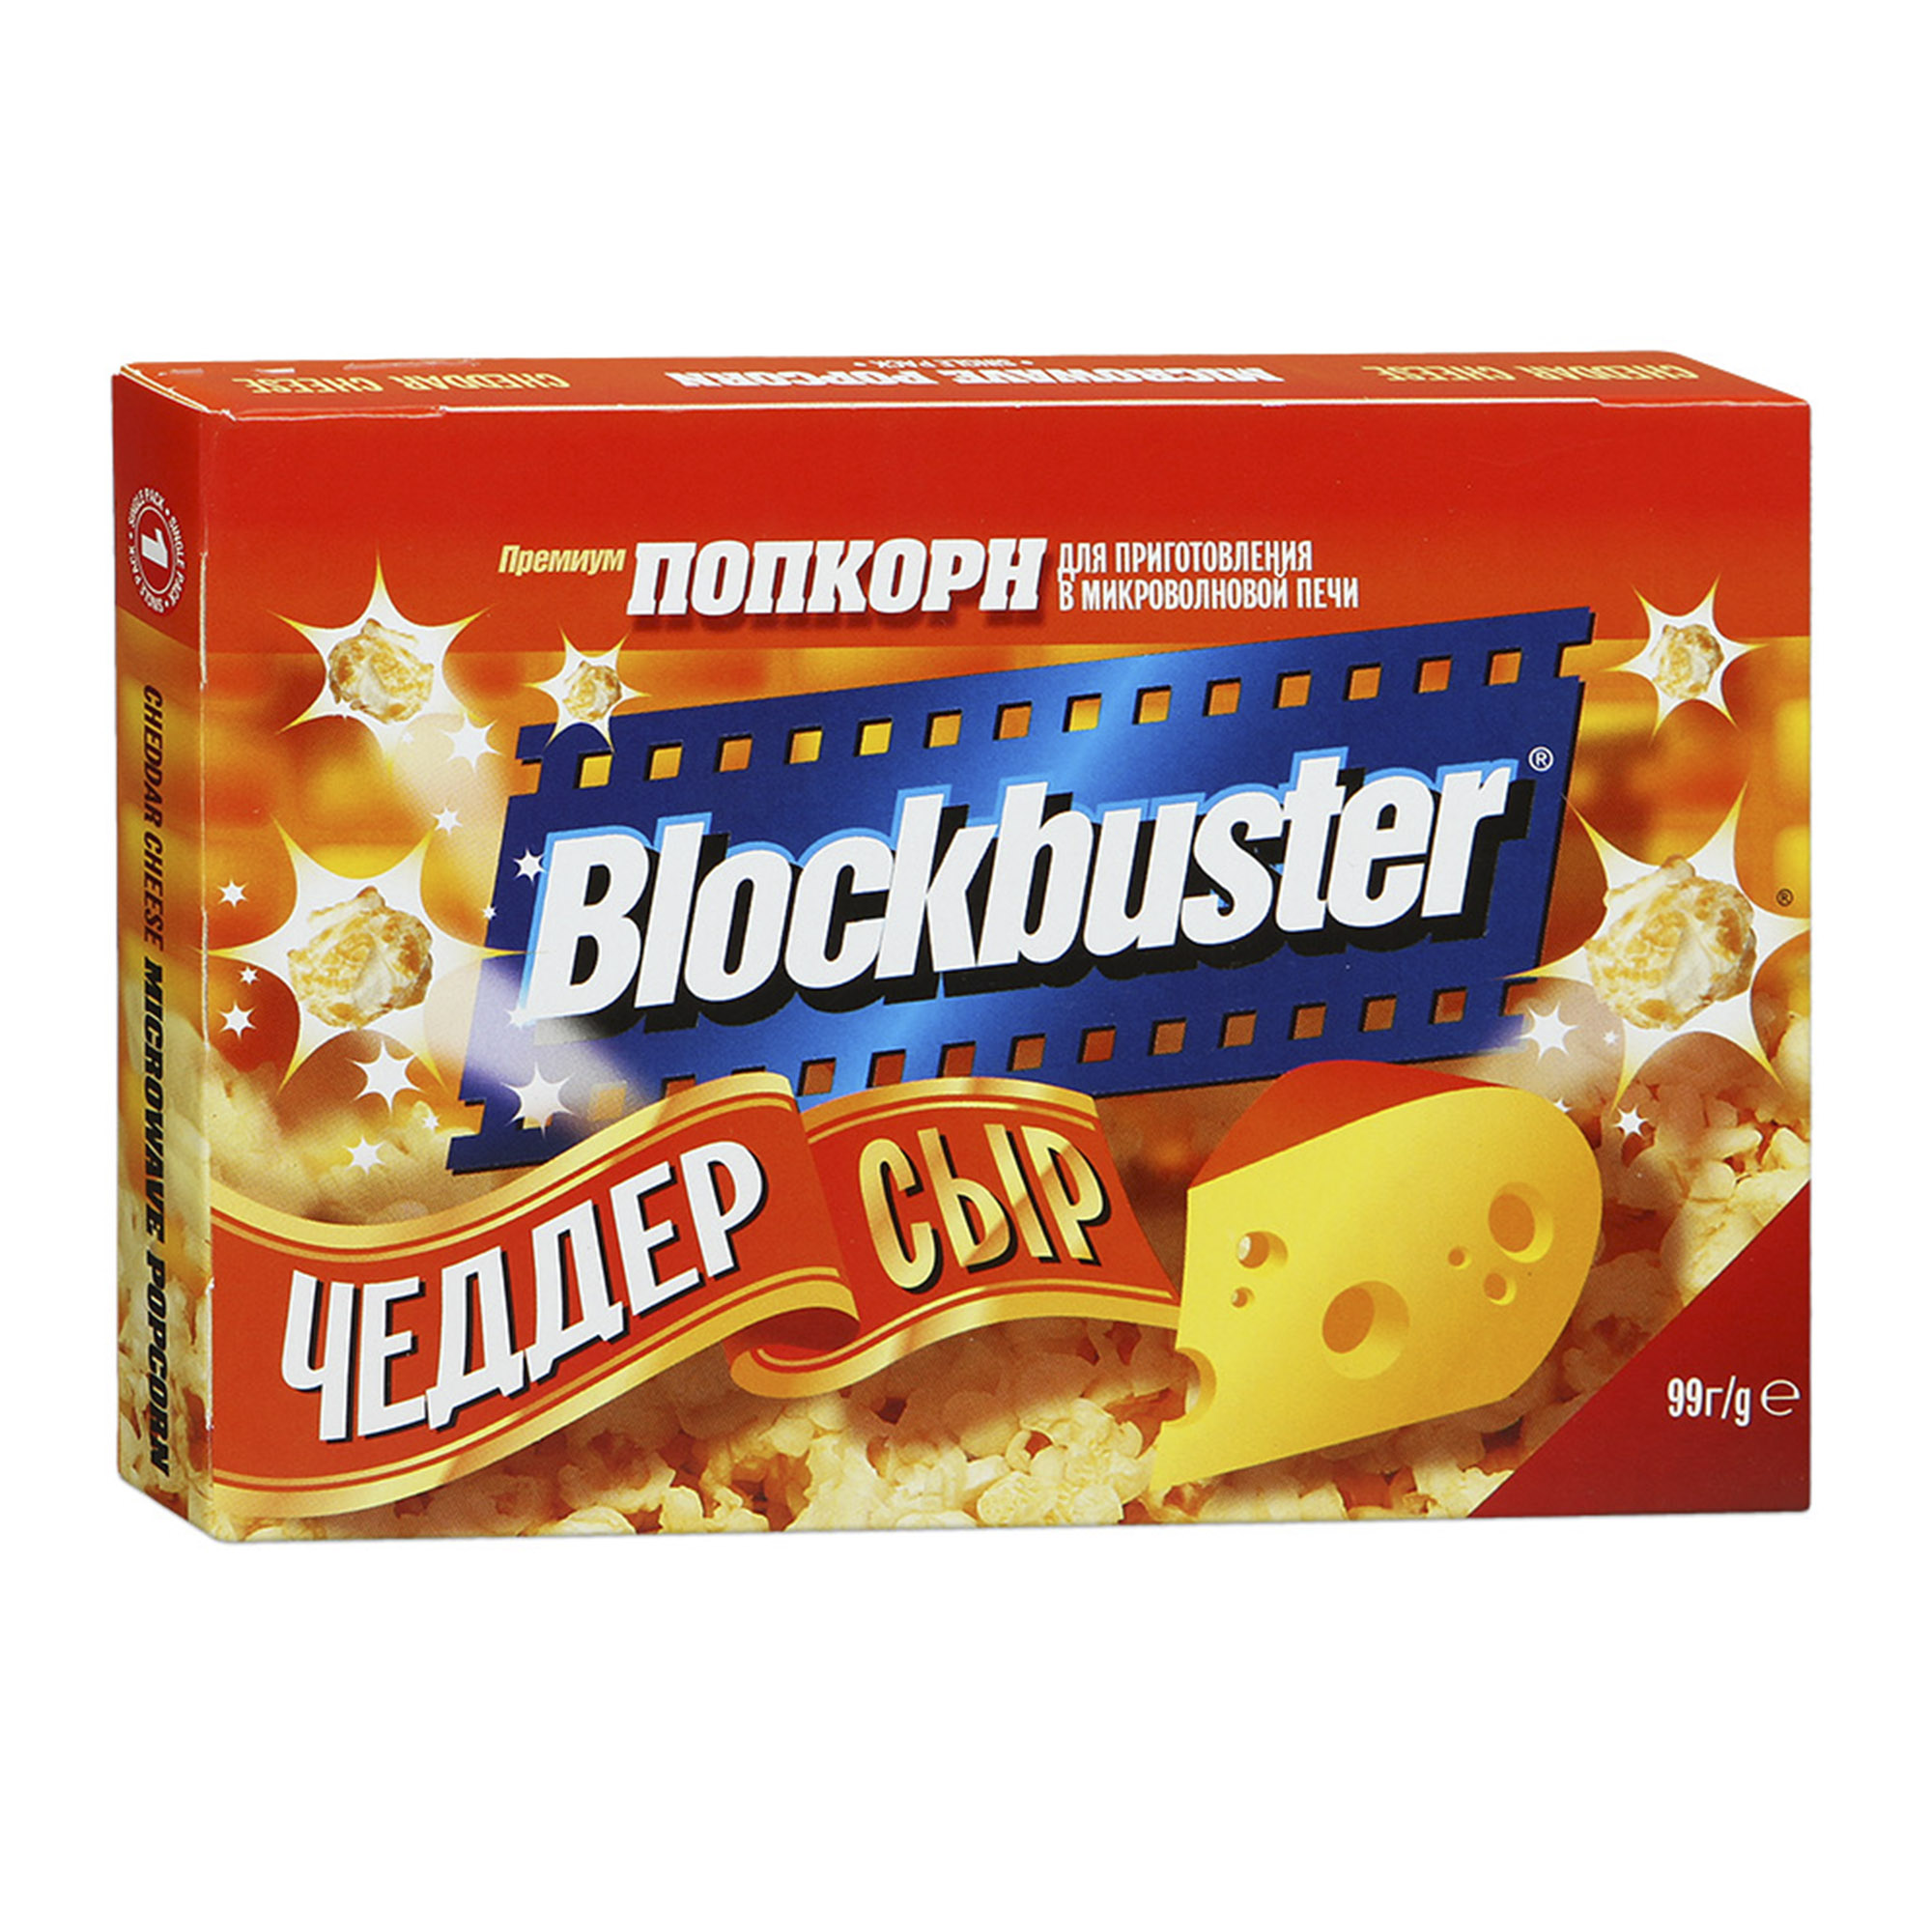 Попкорн Blockbuster с сыром Чеддер 90 г попкорн blockbuster чеддер сыр 99 г